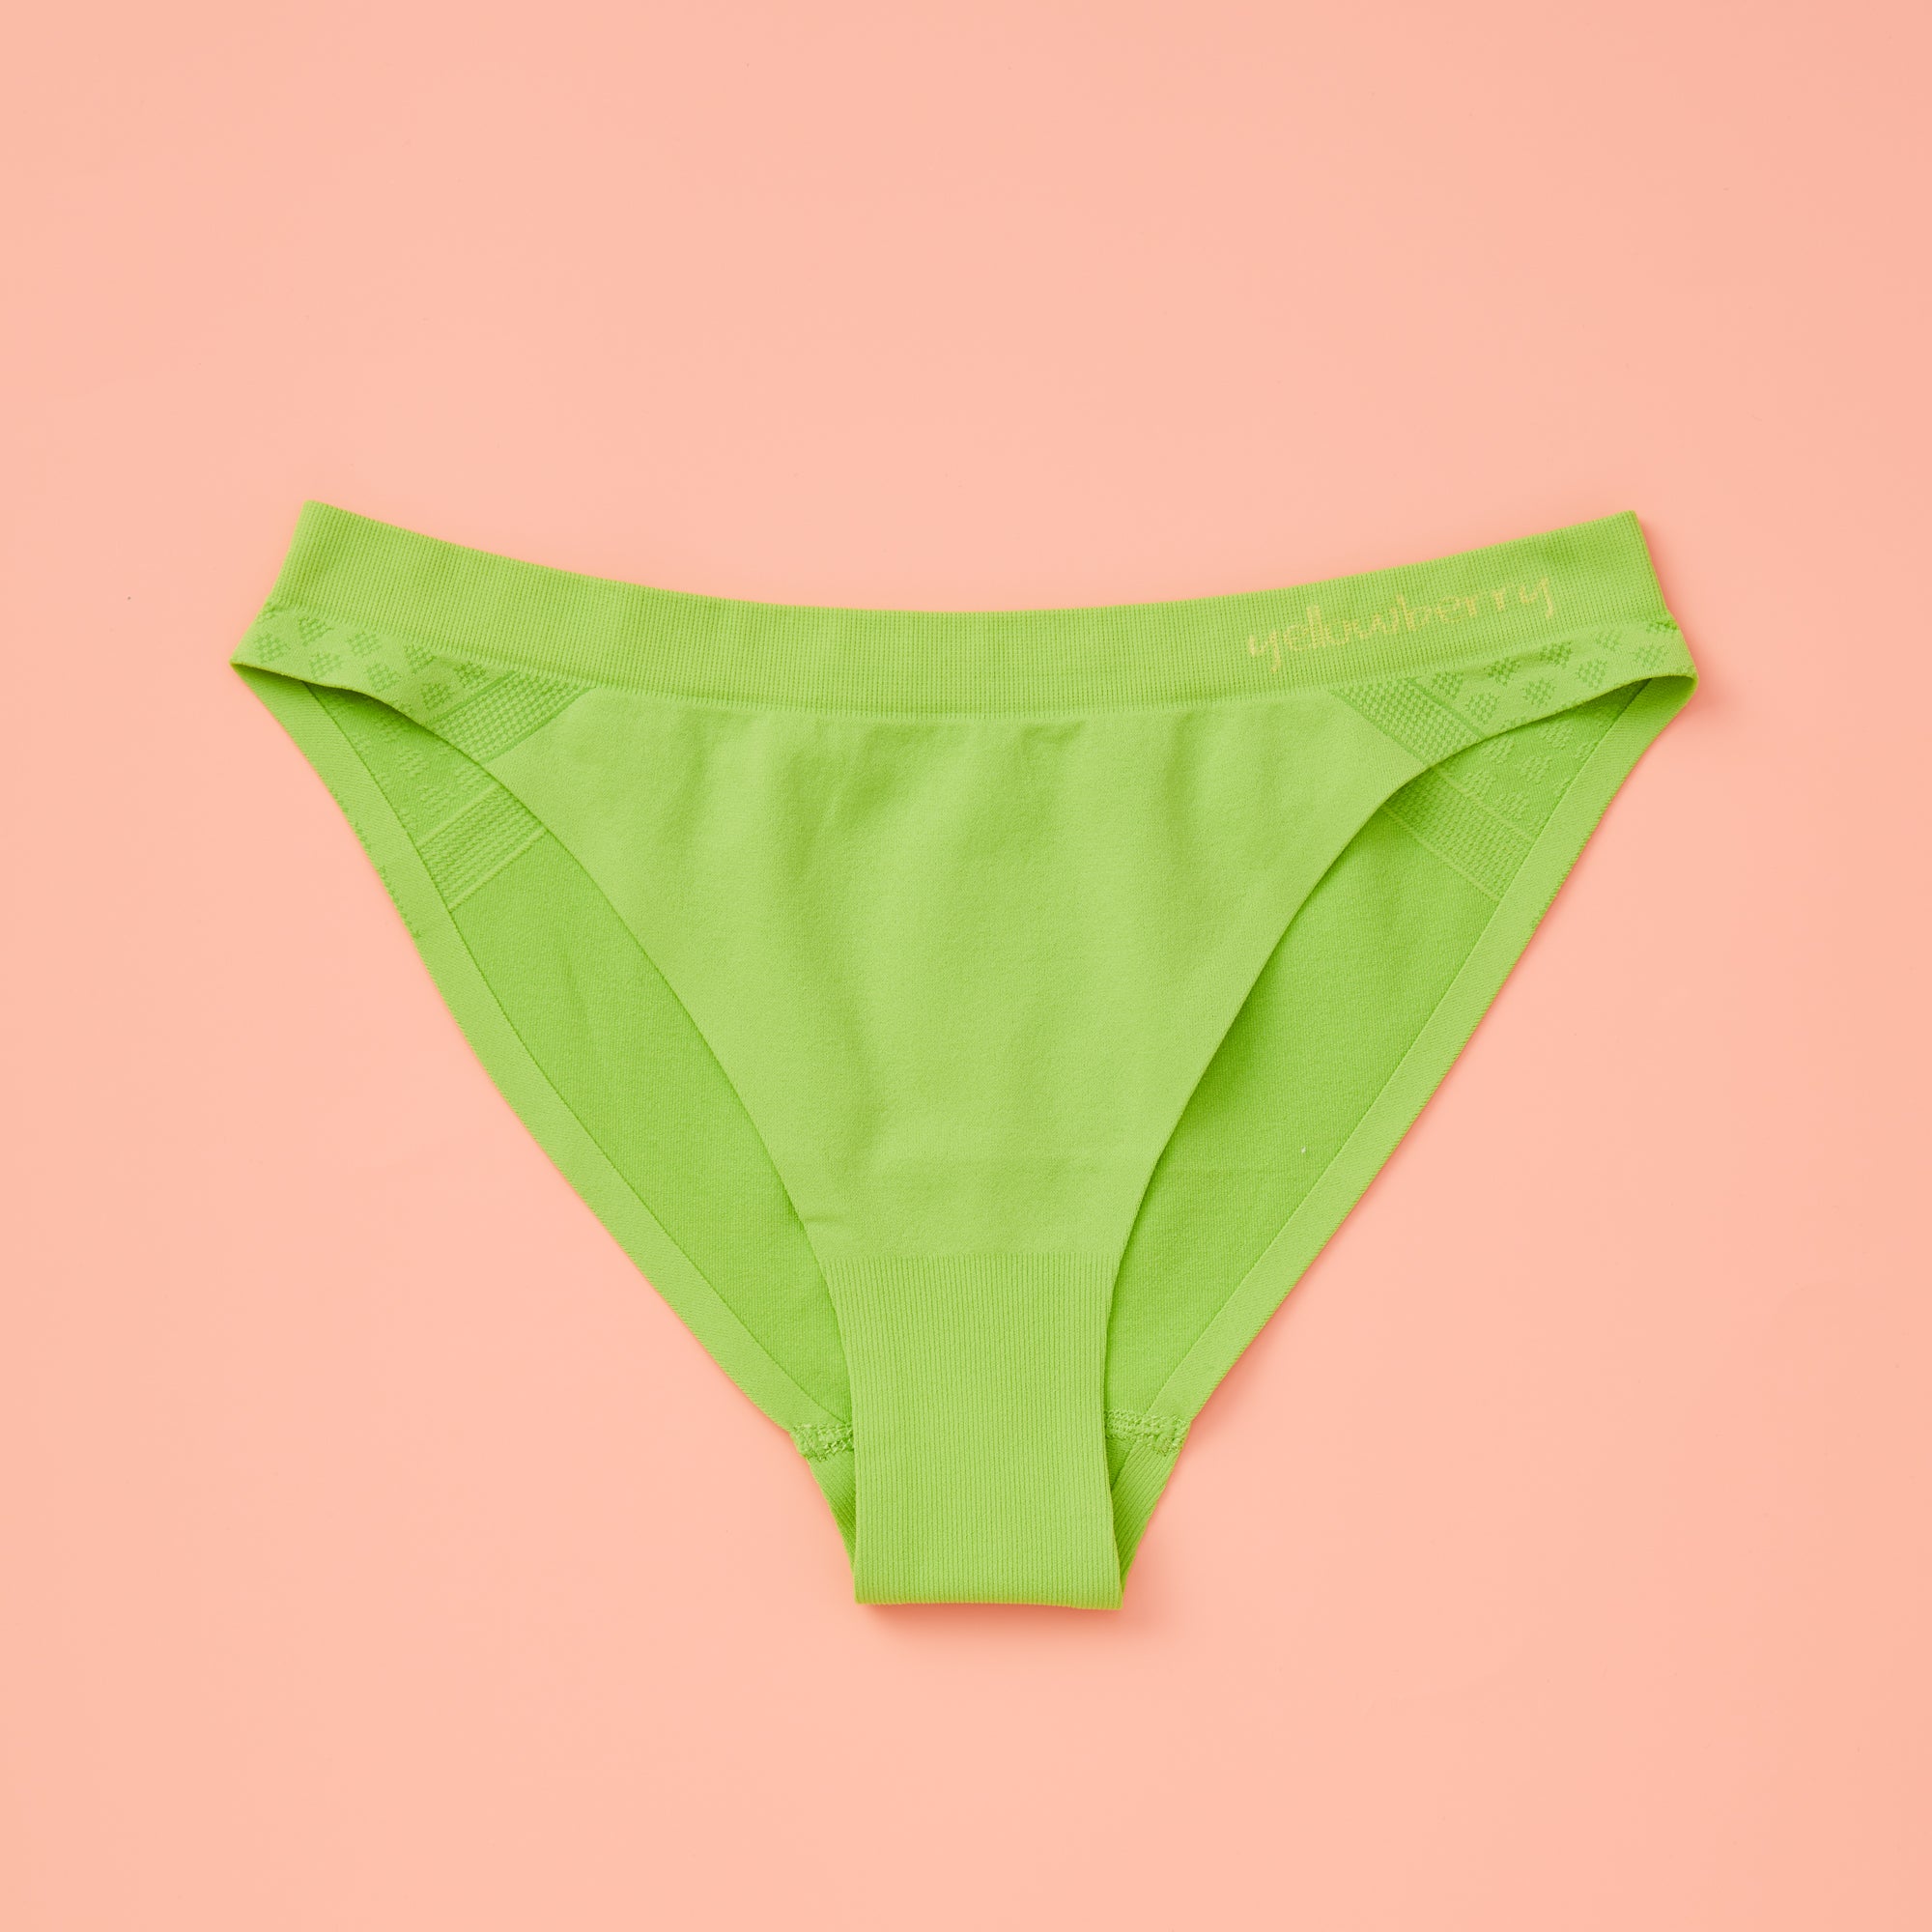 Yellowberry Smartie Pants Seamless Underwear Twistr Panty Quality Bundle  Girls Underwear (Pack of 6)